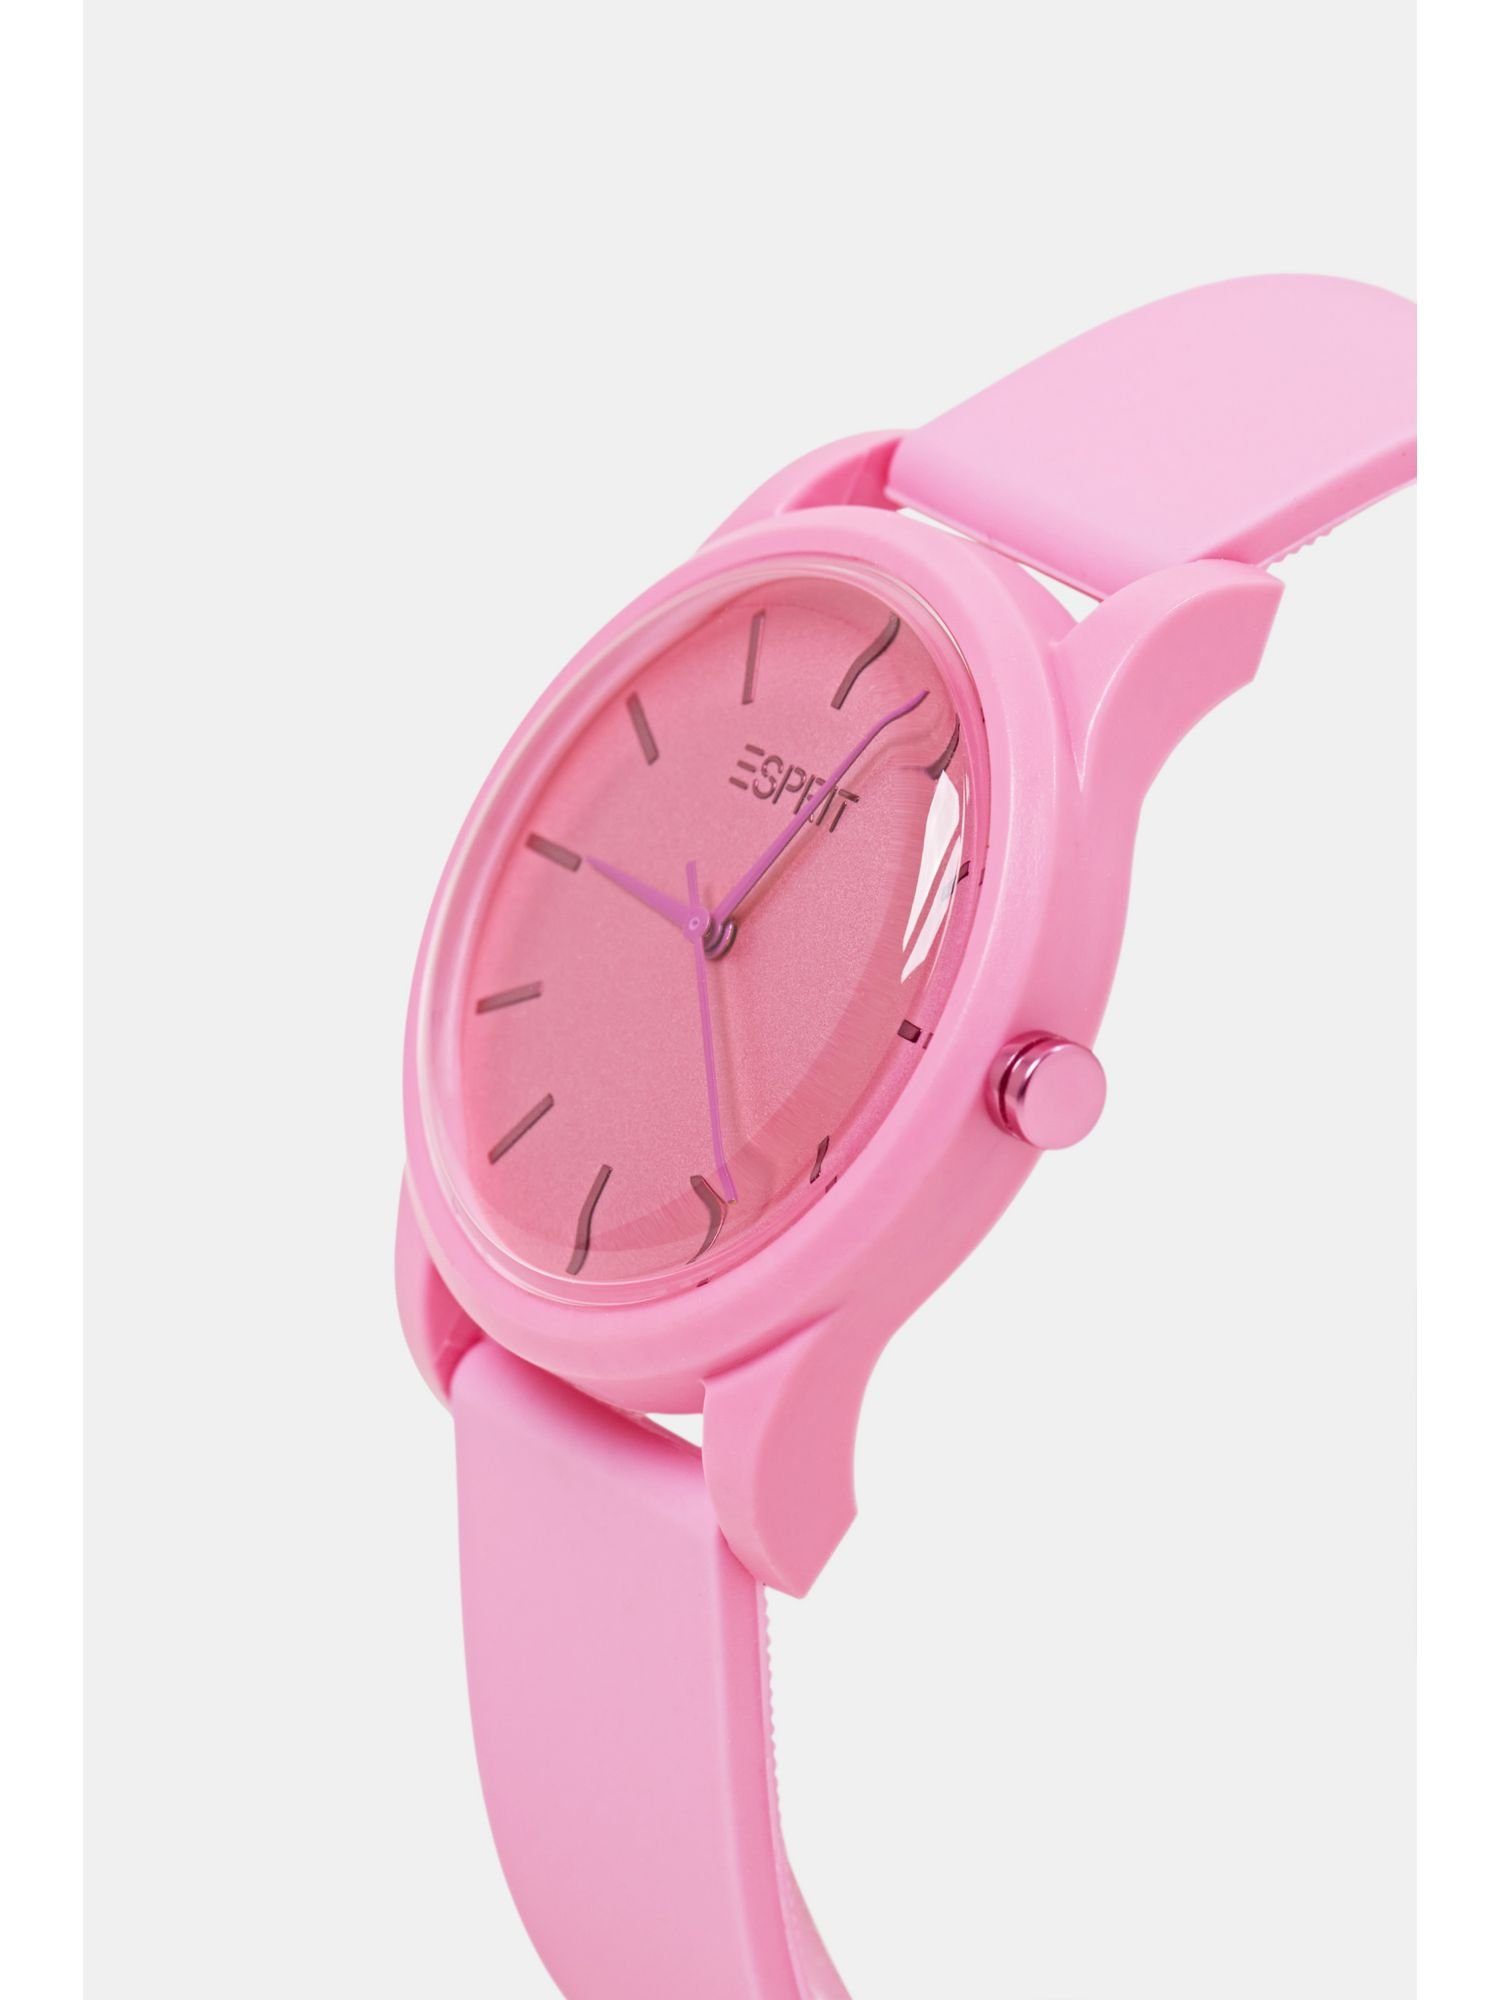 Gummiarmband Esprit Farbige pink mit Chronograph Uhr